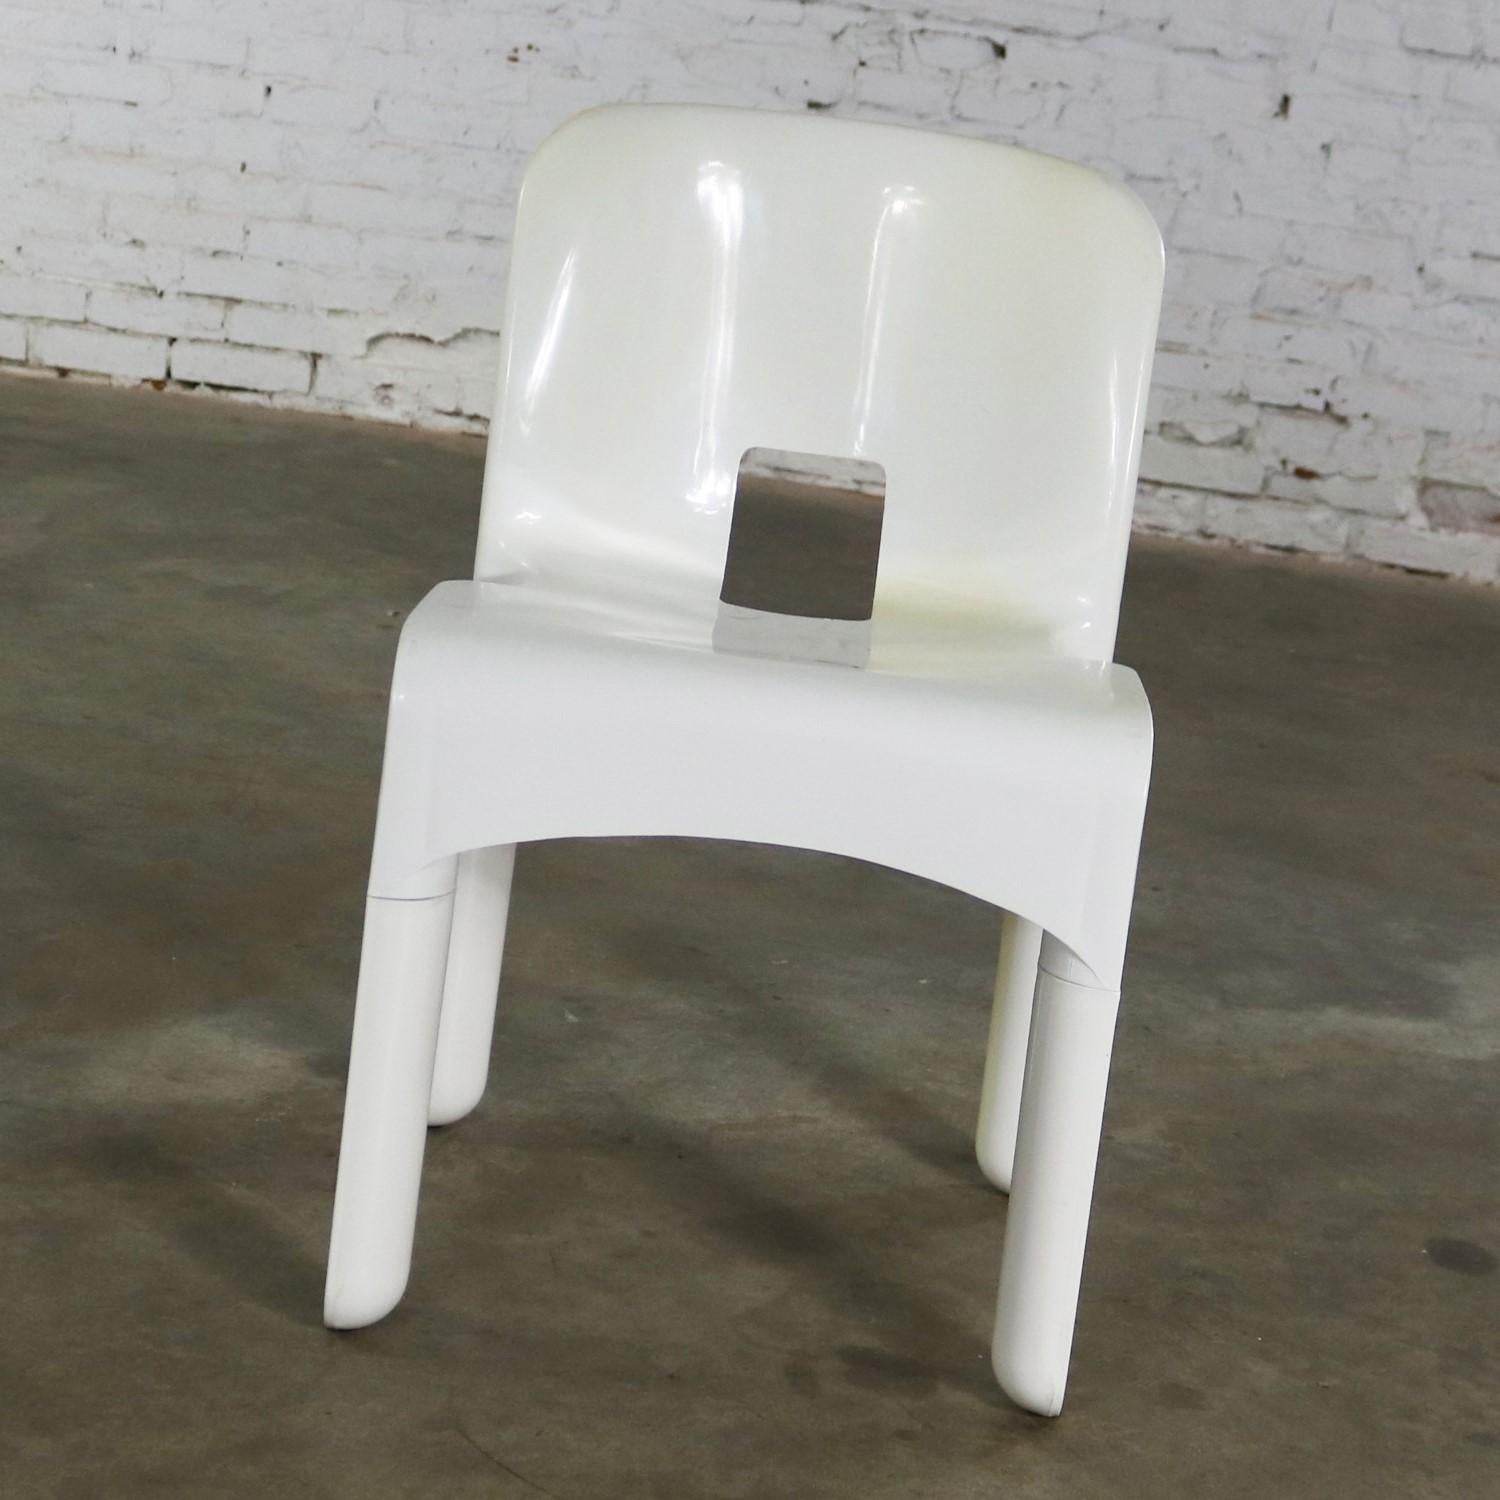 chair universal 4867